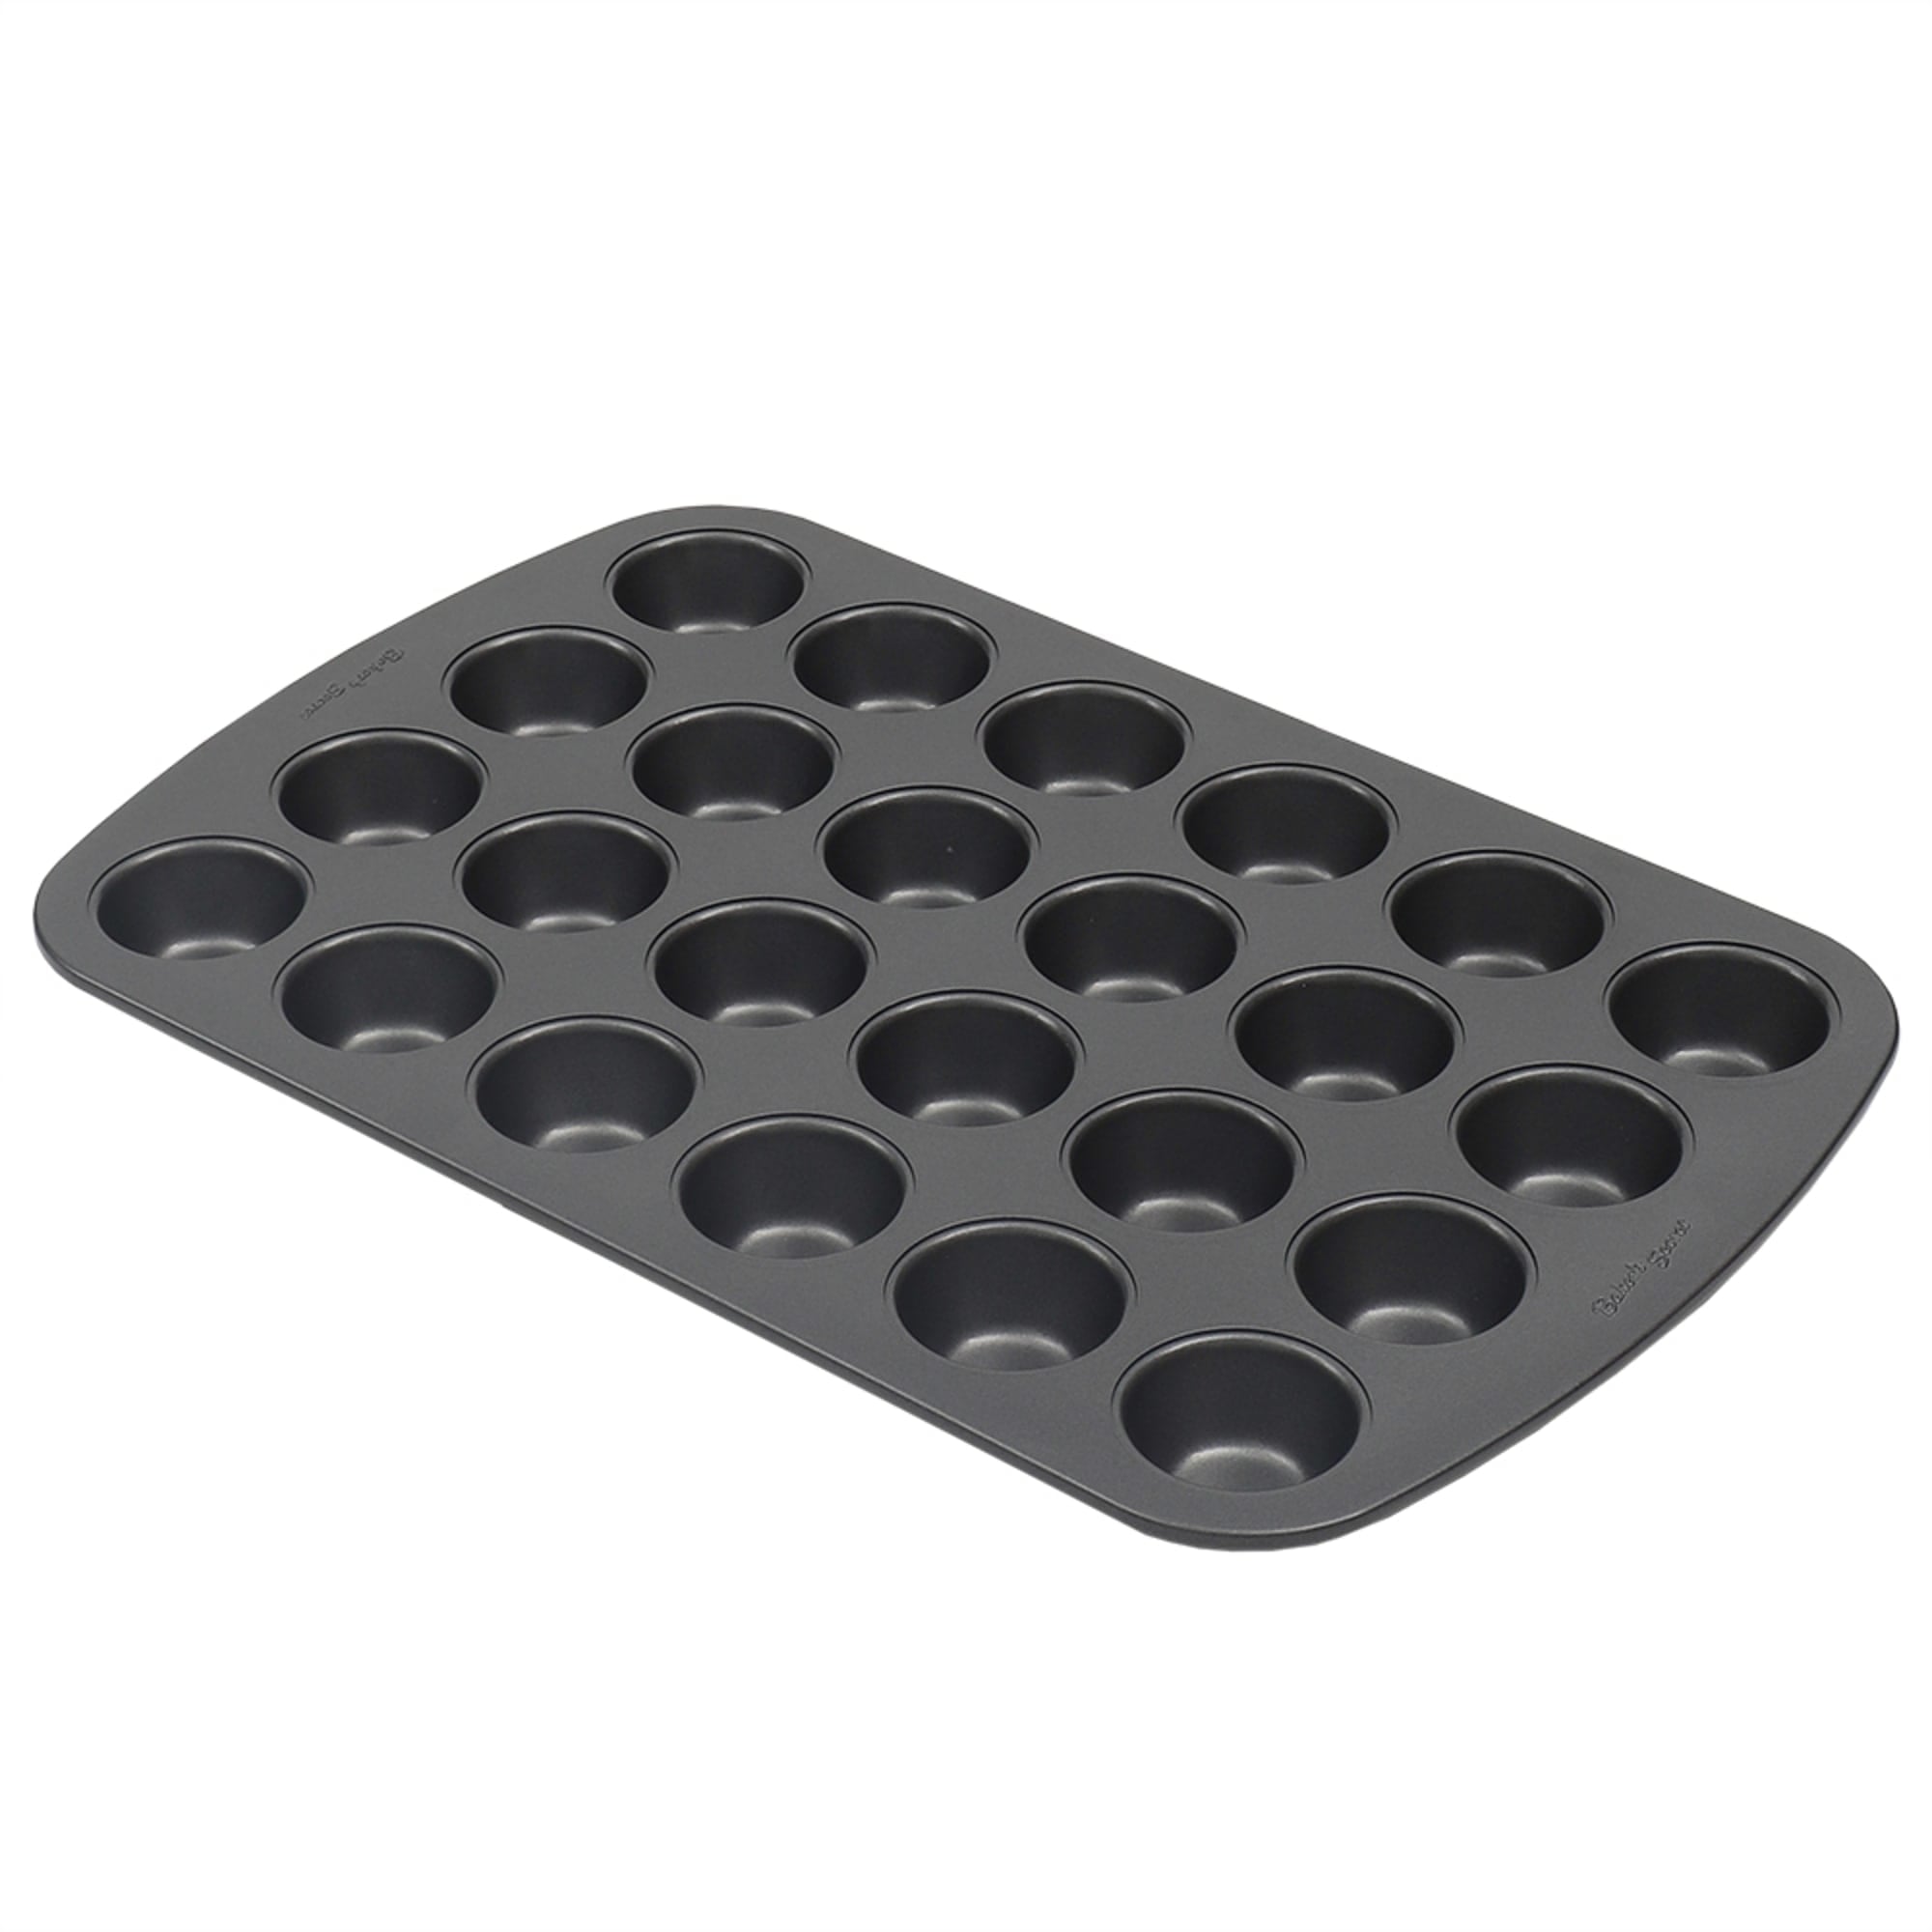 Baker’s Secret Essentials 24-Cup Non-Stick Steel Mini Muffin Pan $10.00 EACH, CASE PACK OF 12